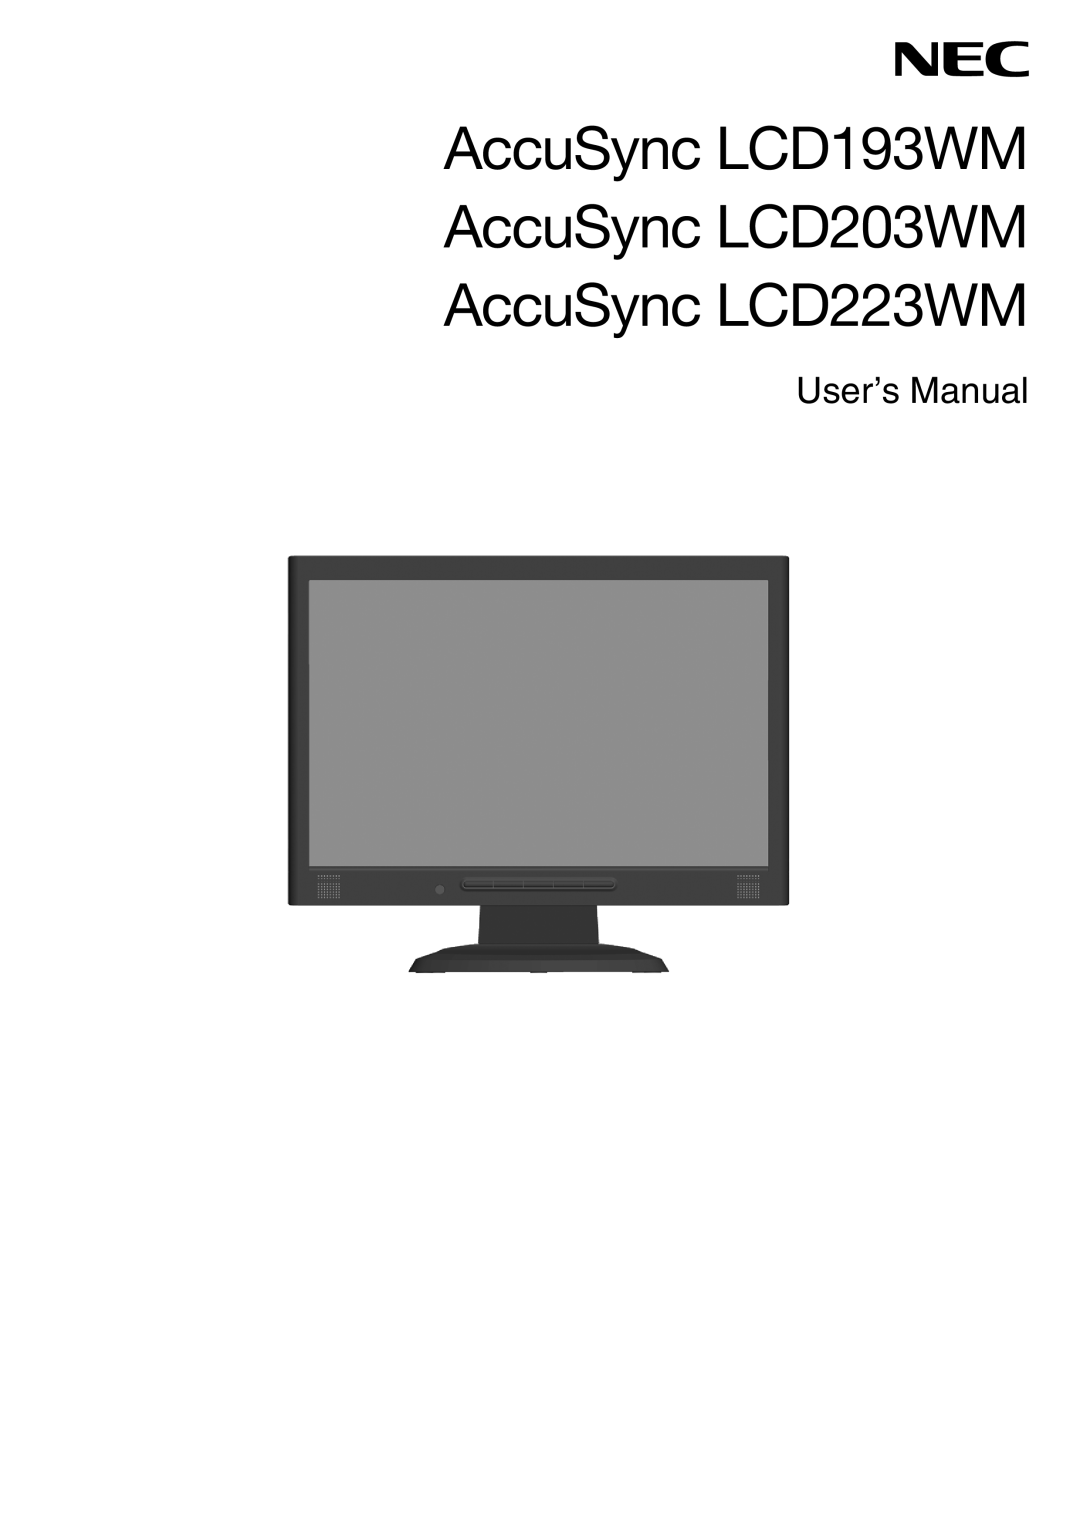 NEC user manual AccuSync LCD193WM AccuSync LCD203WM, AccuSync LCD223WM, UserÕs Manual 